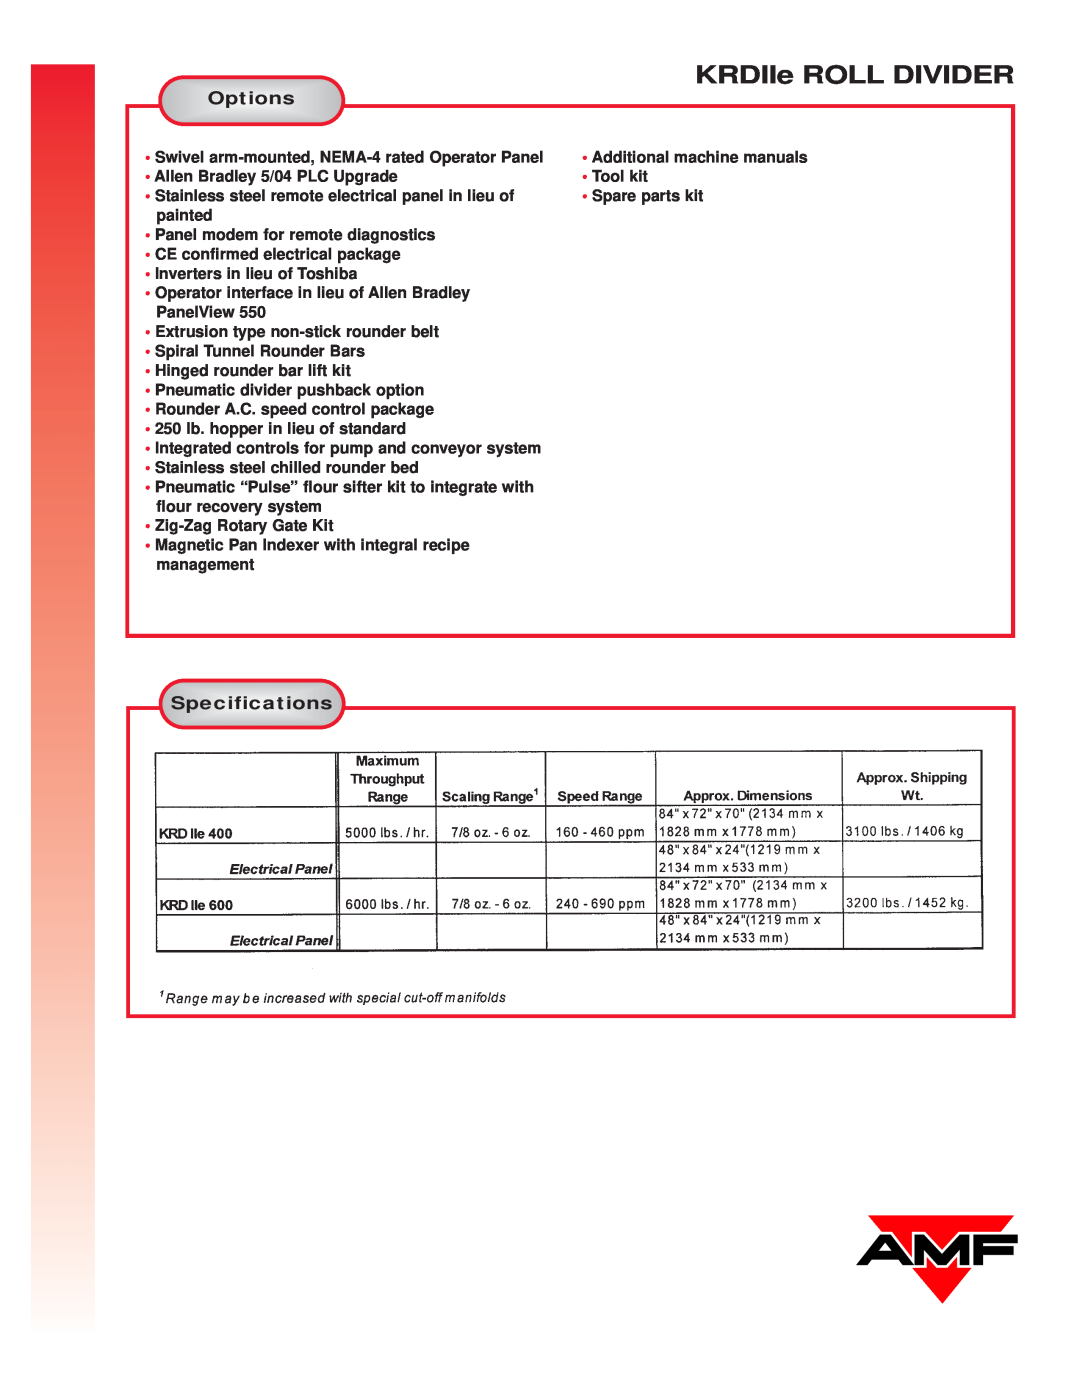 AMF KRDIIe Roll Devider manual Options, Specifications, KRDIIe ROLL DIVIDER 